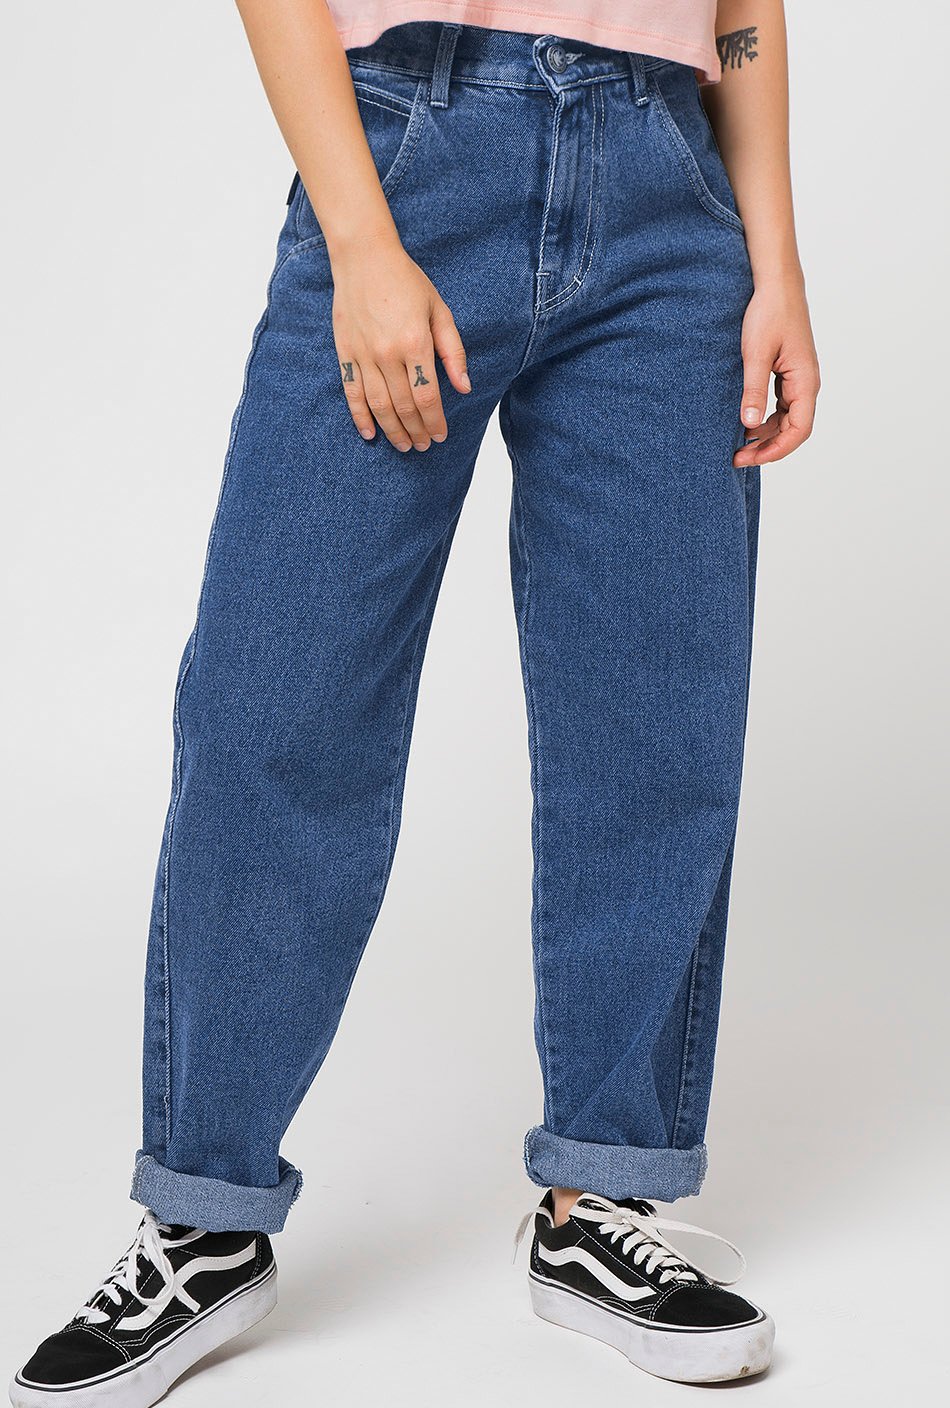 Globo Denim Bleach Jeans